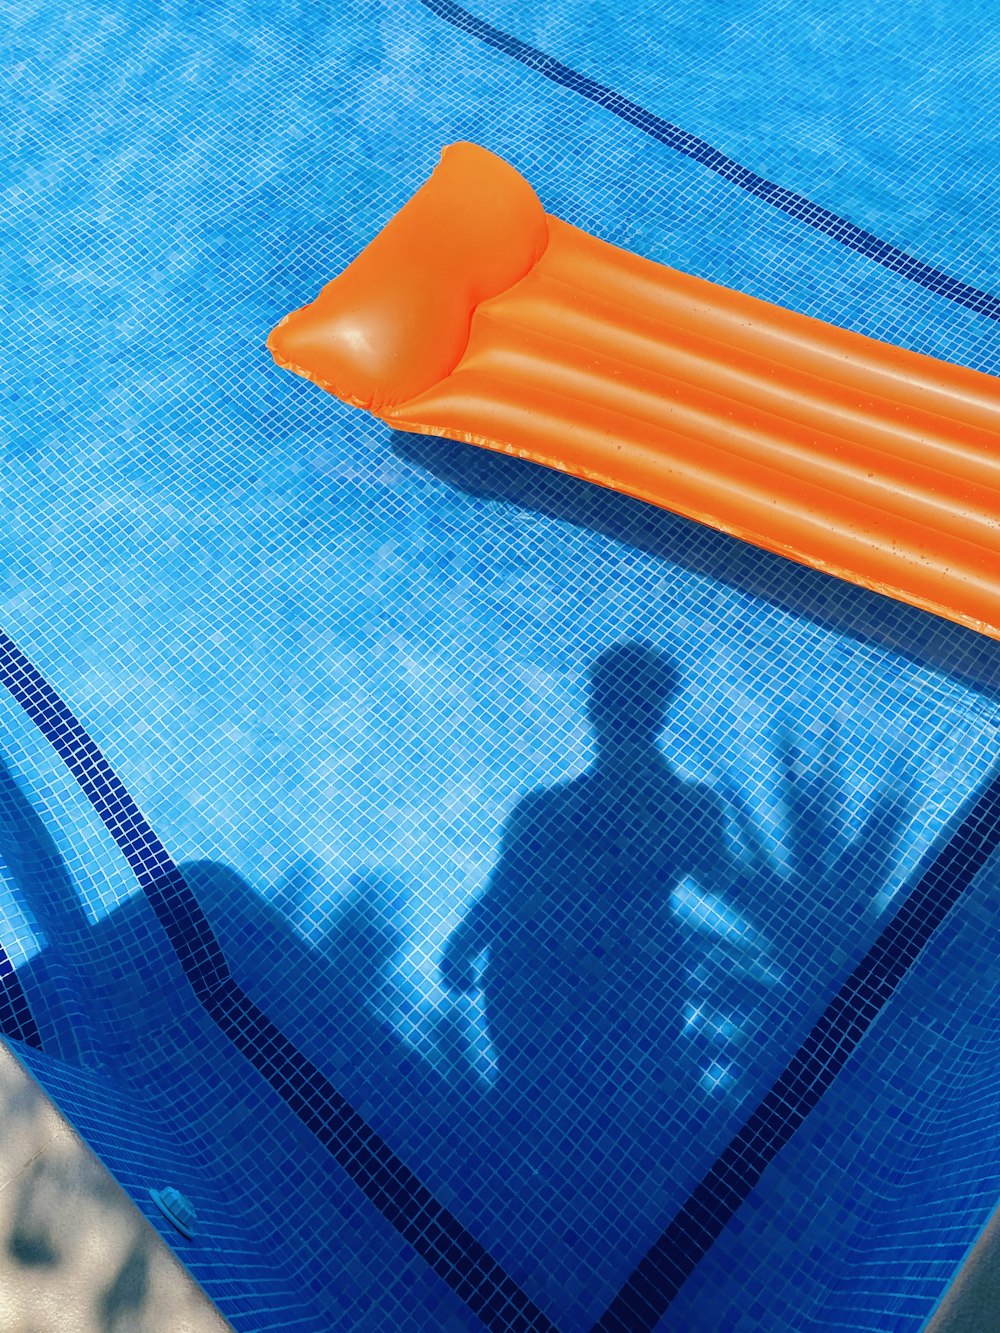 Herramienta de plástico naranja sobre textil azul